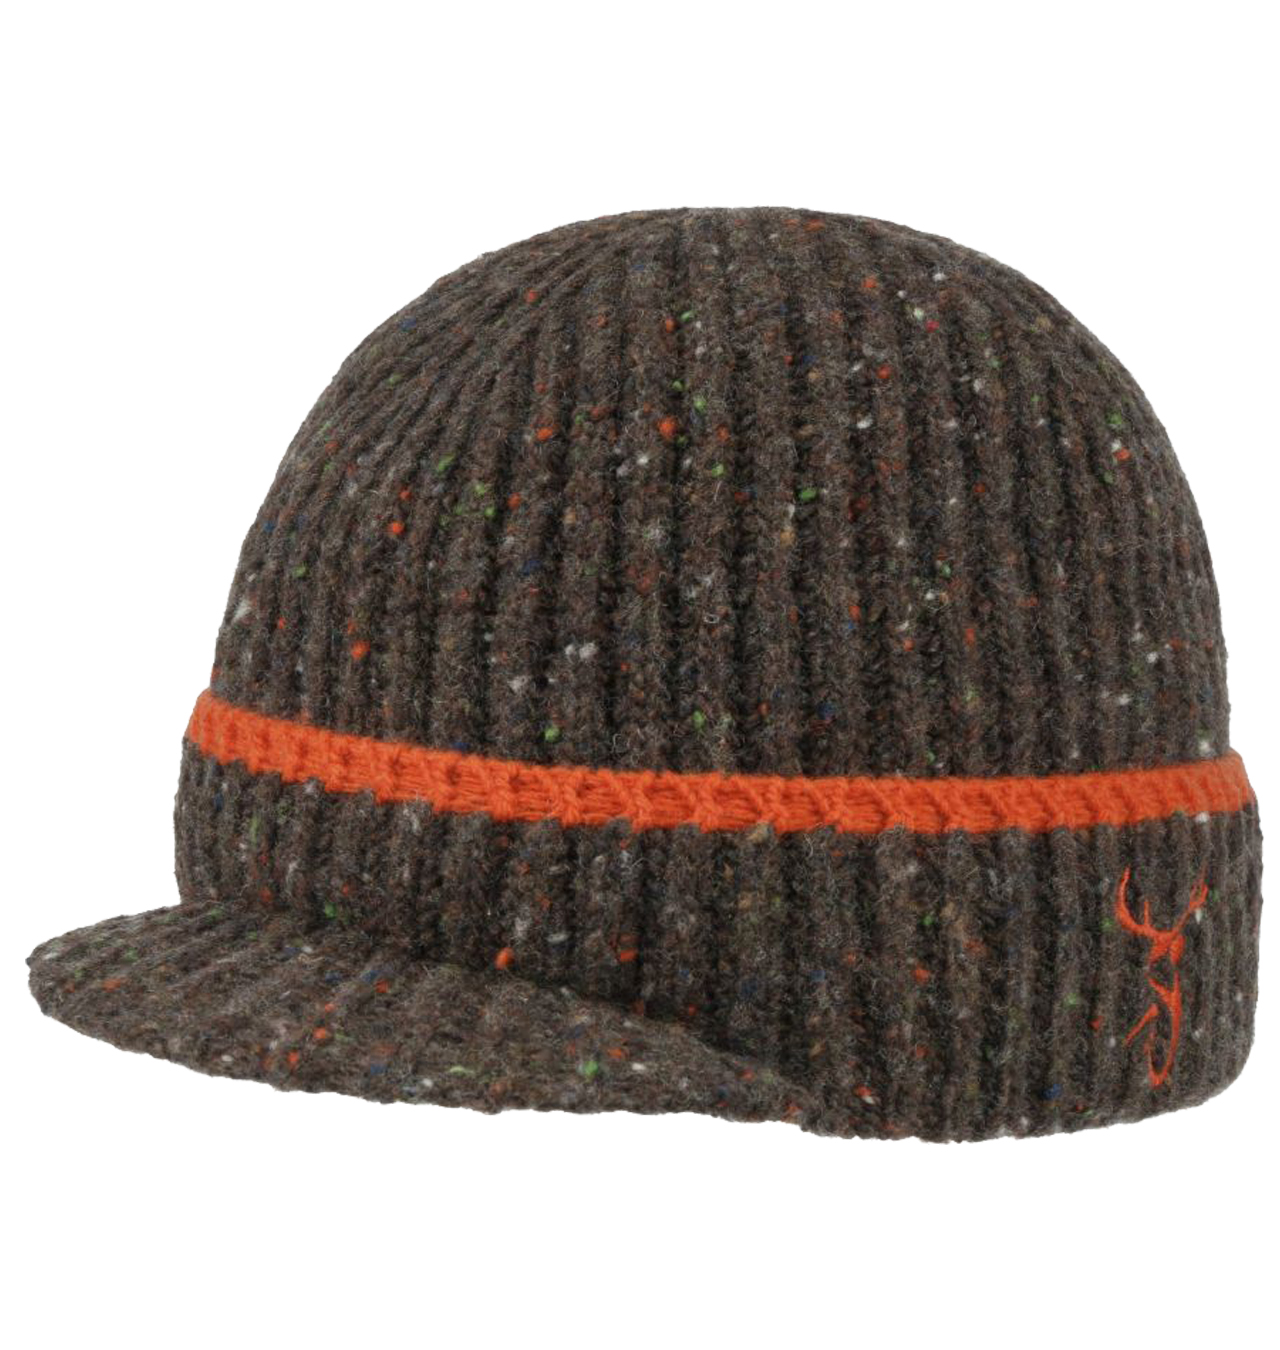 Stetson - Deer Beanie Hat With Peak - Brown